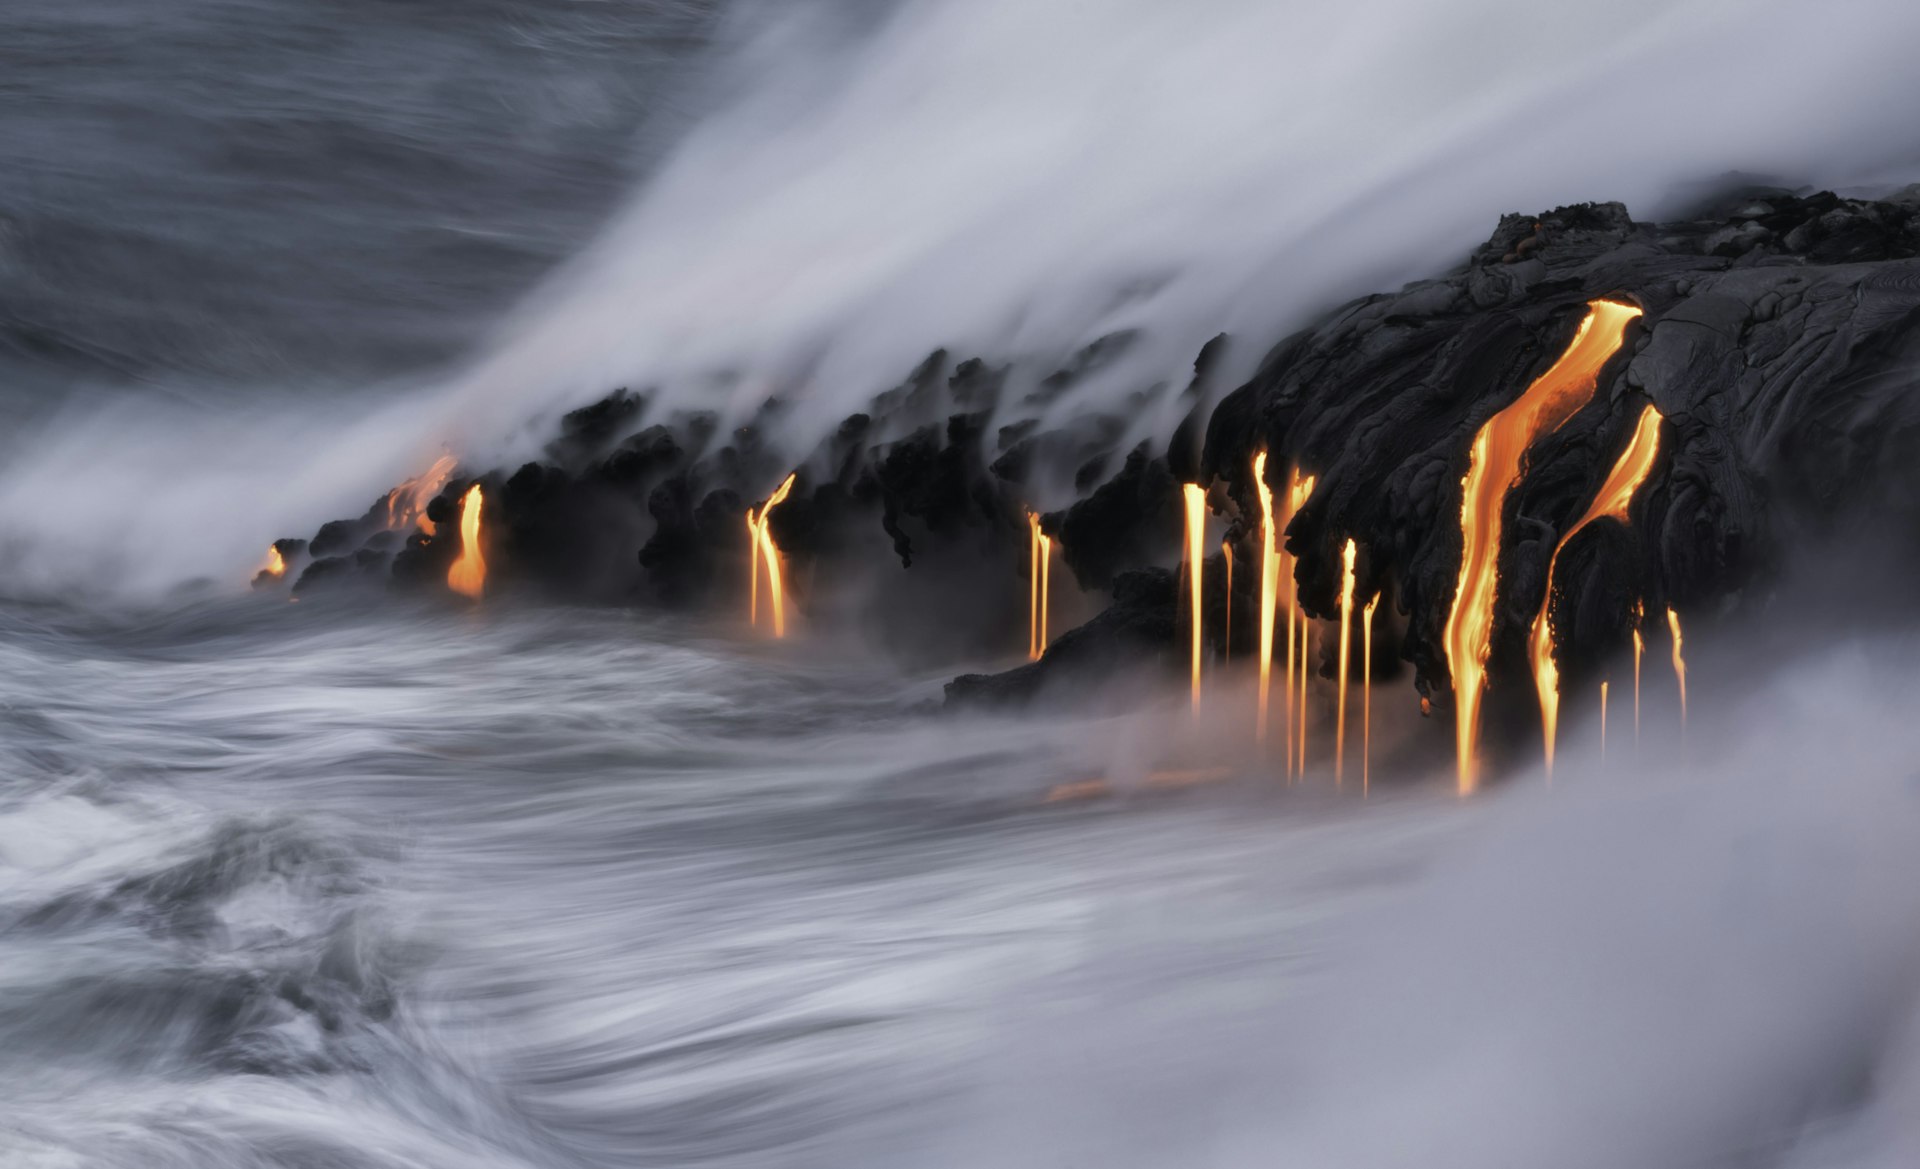 Lava flows into the ocean at Kilauea, Hawaii